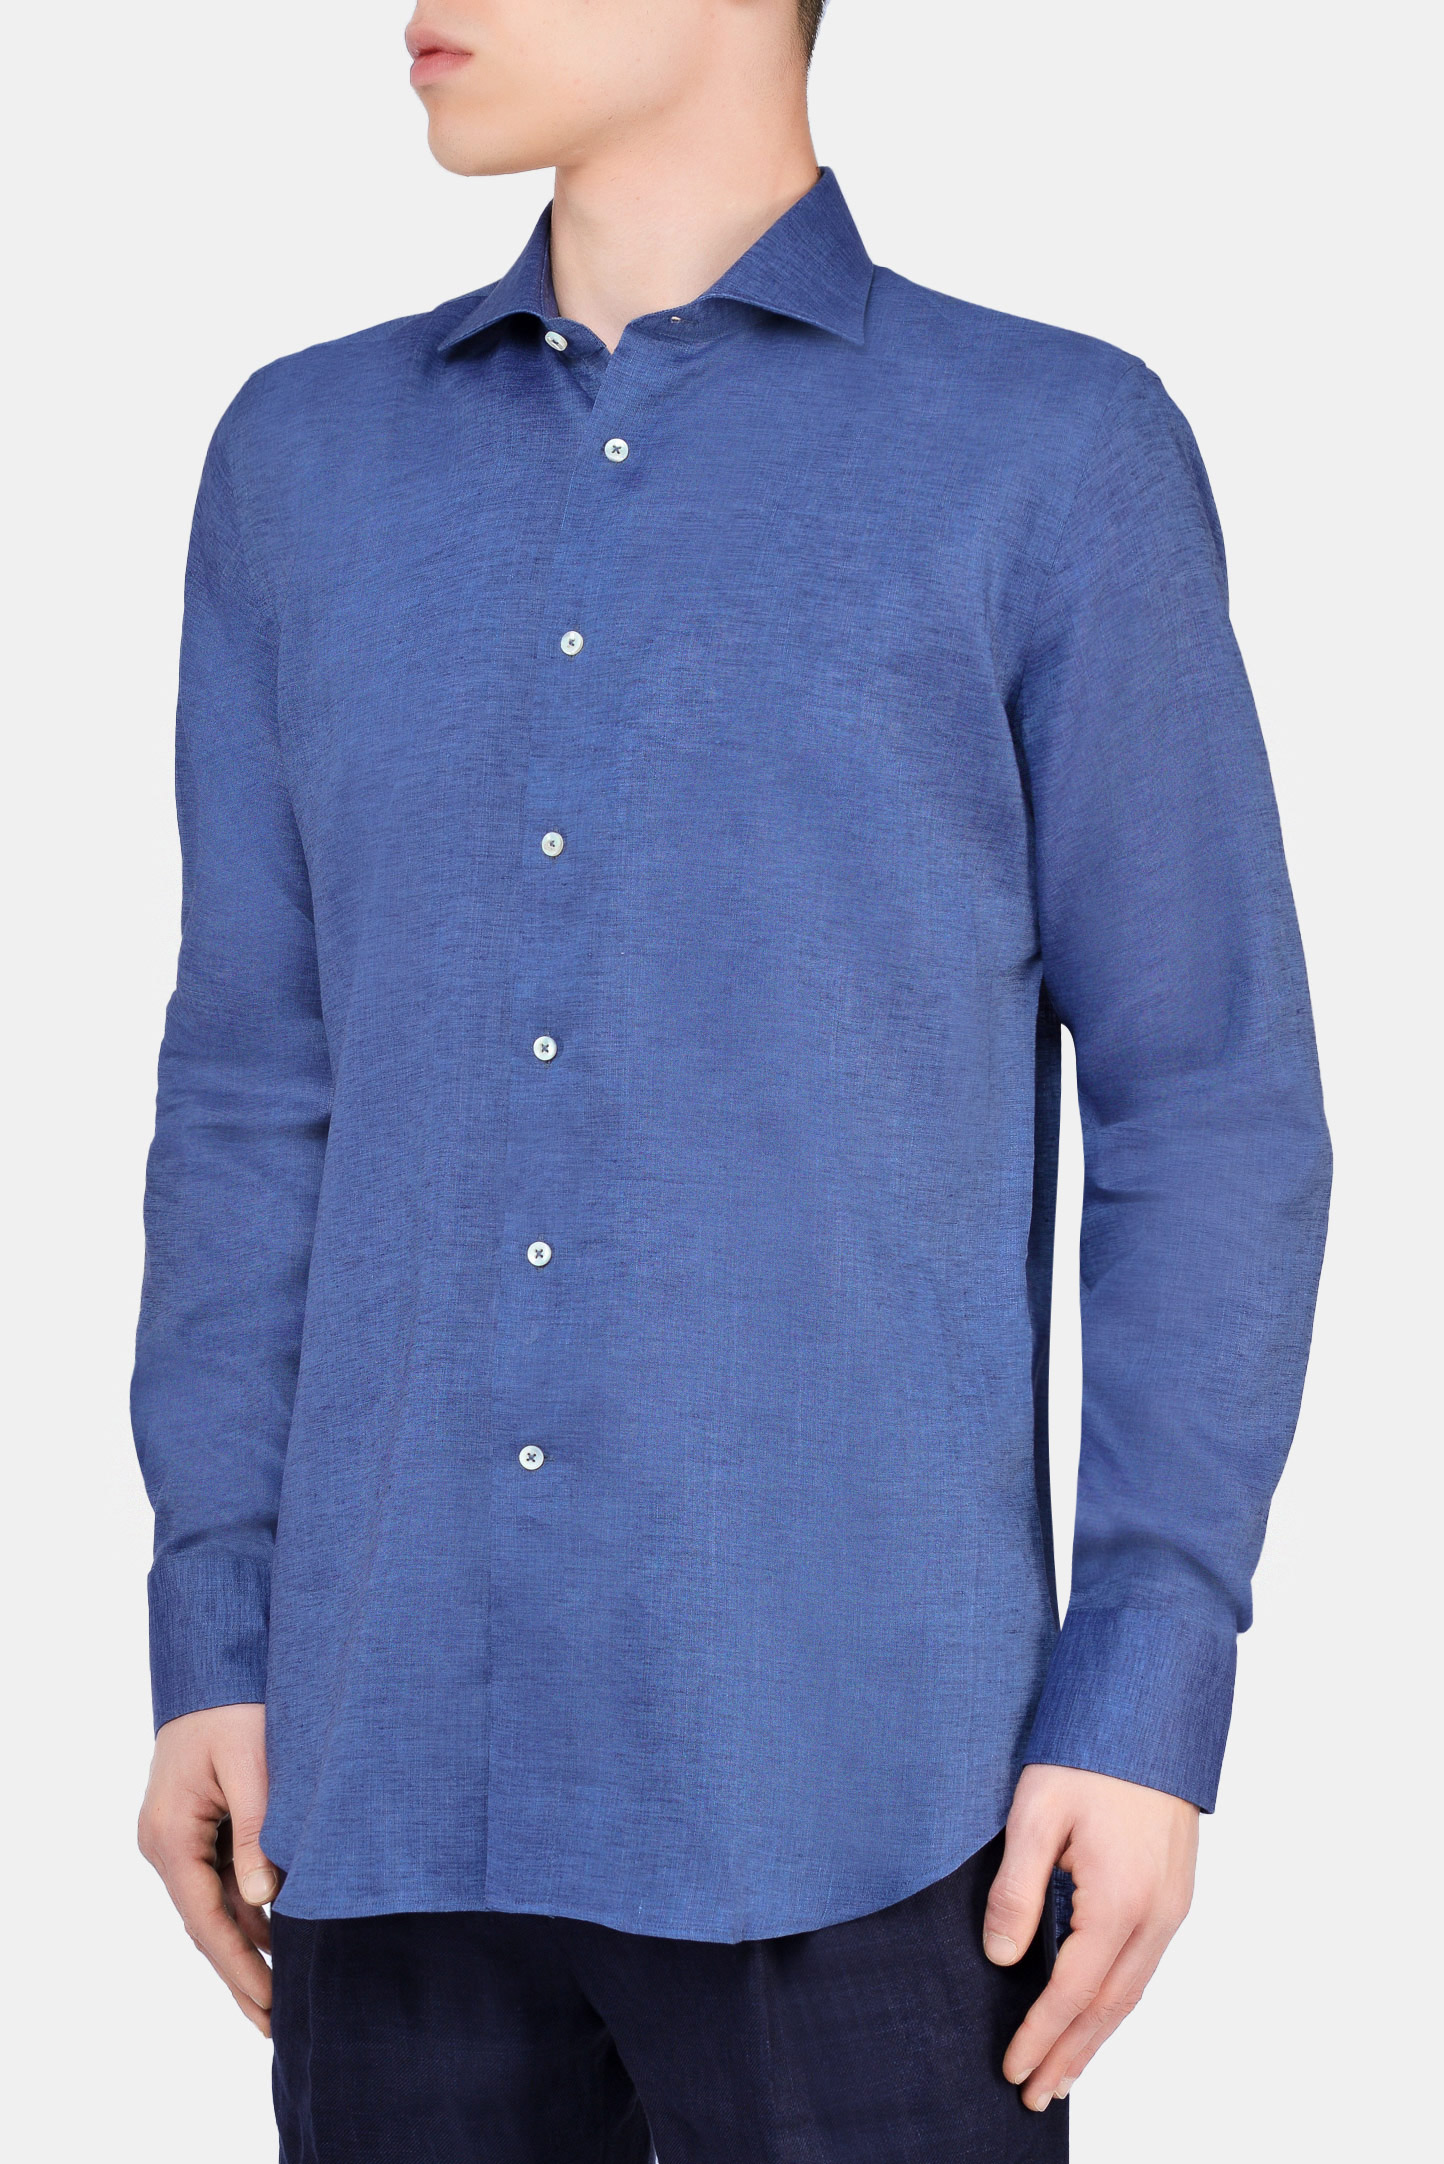 Рубашка CANALI GR01840/301, цвет: Синий, Мужской